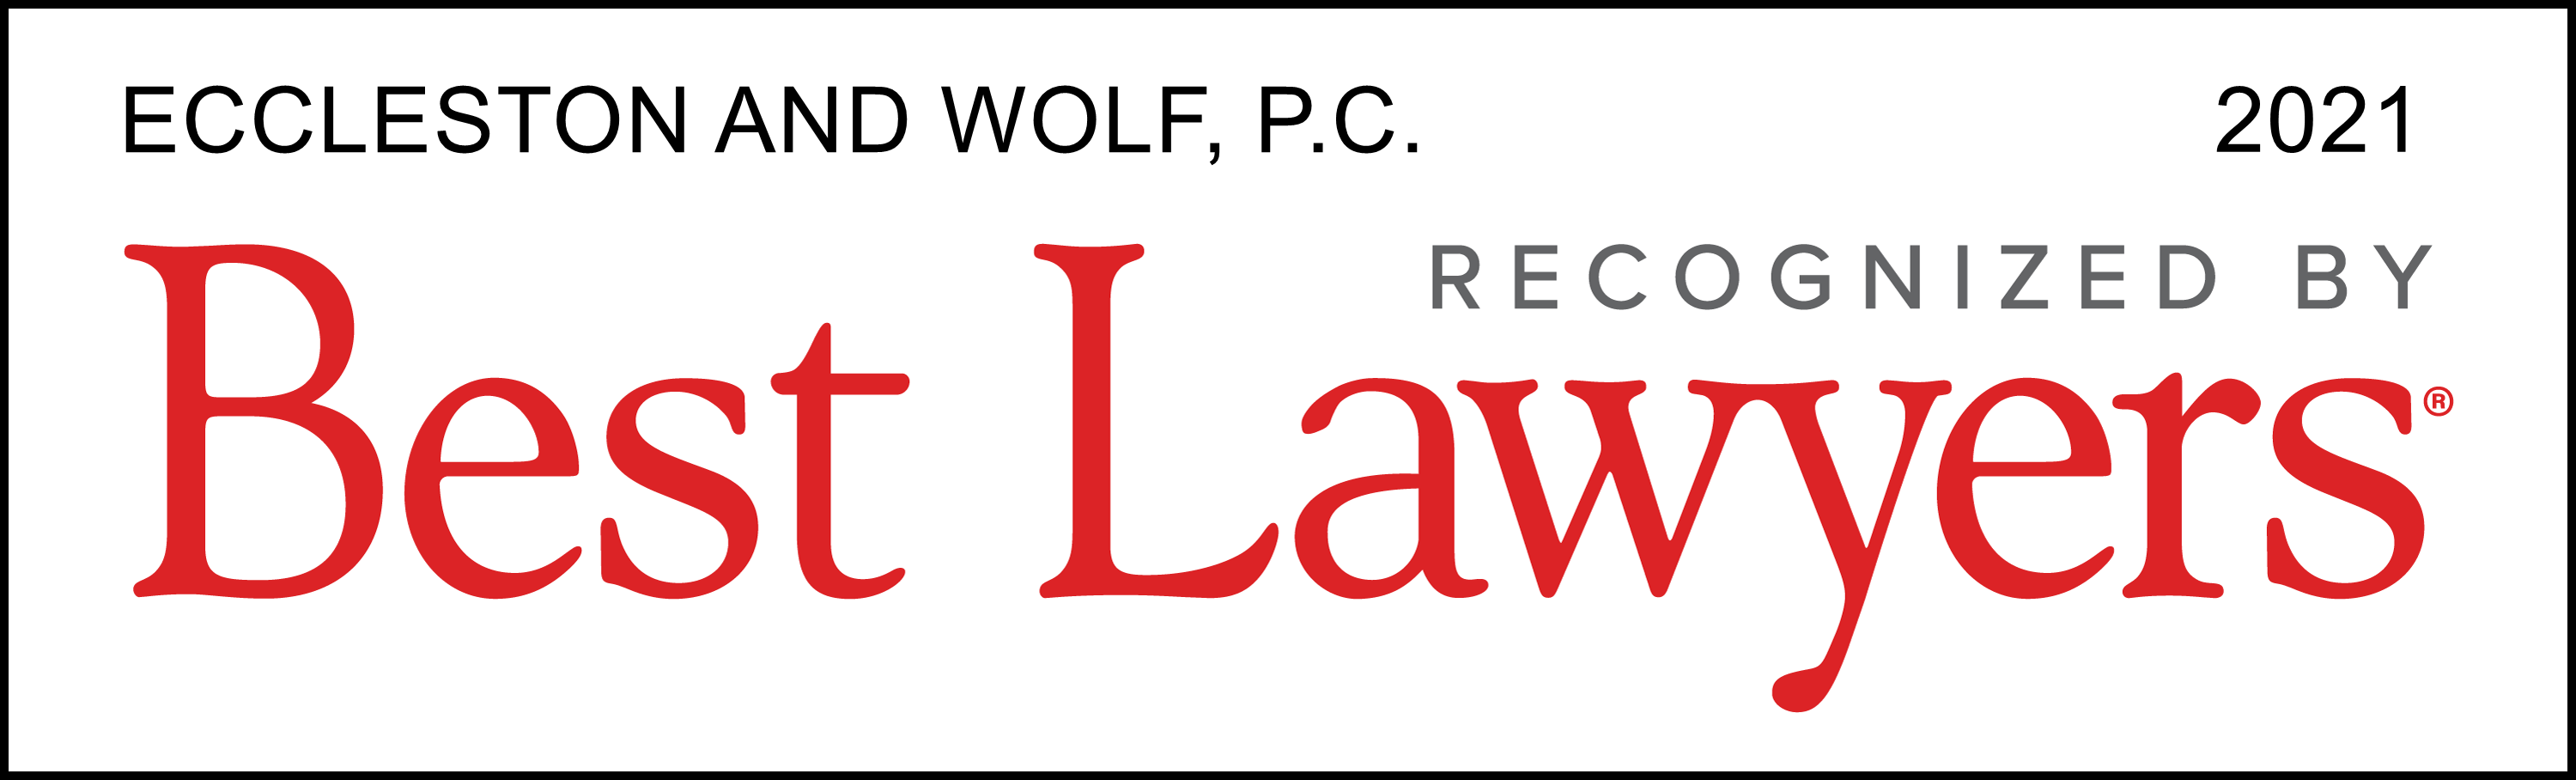 Best Lawyers - Firm Logo 2021